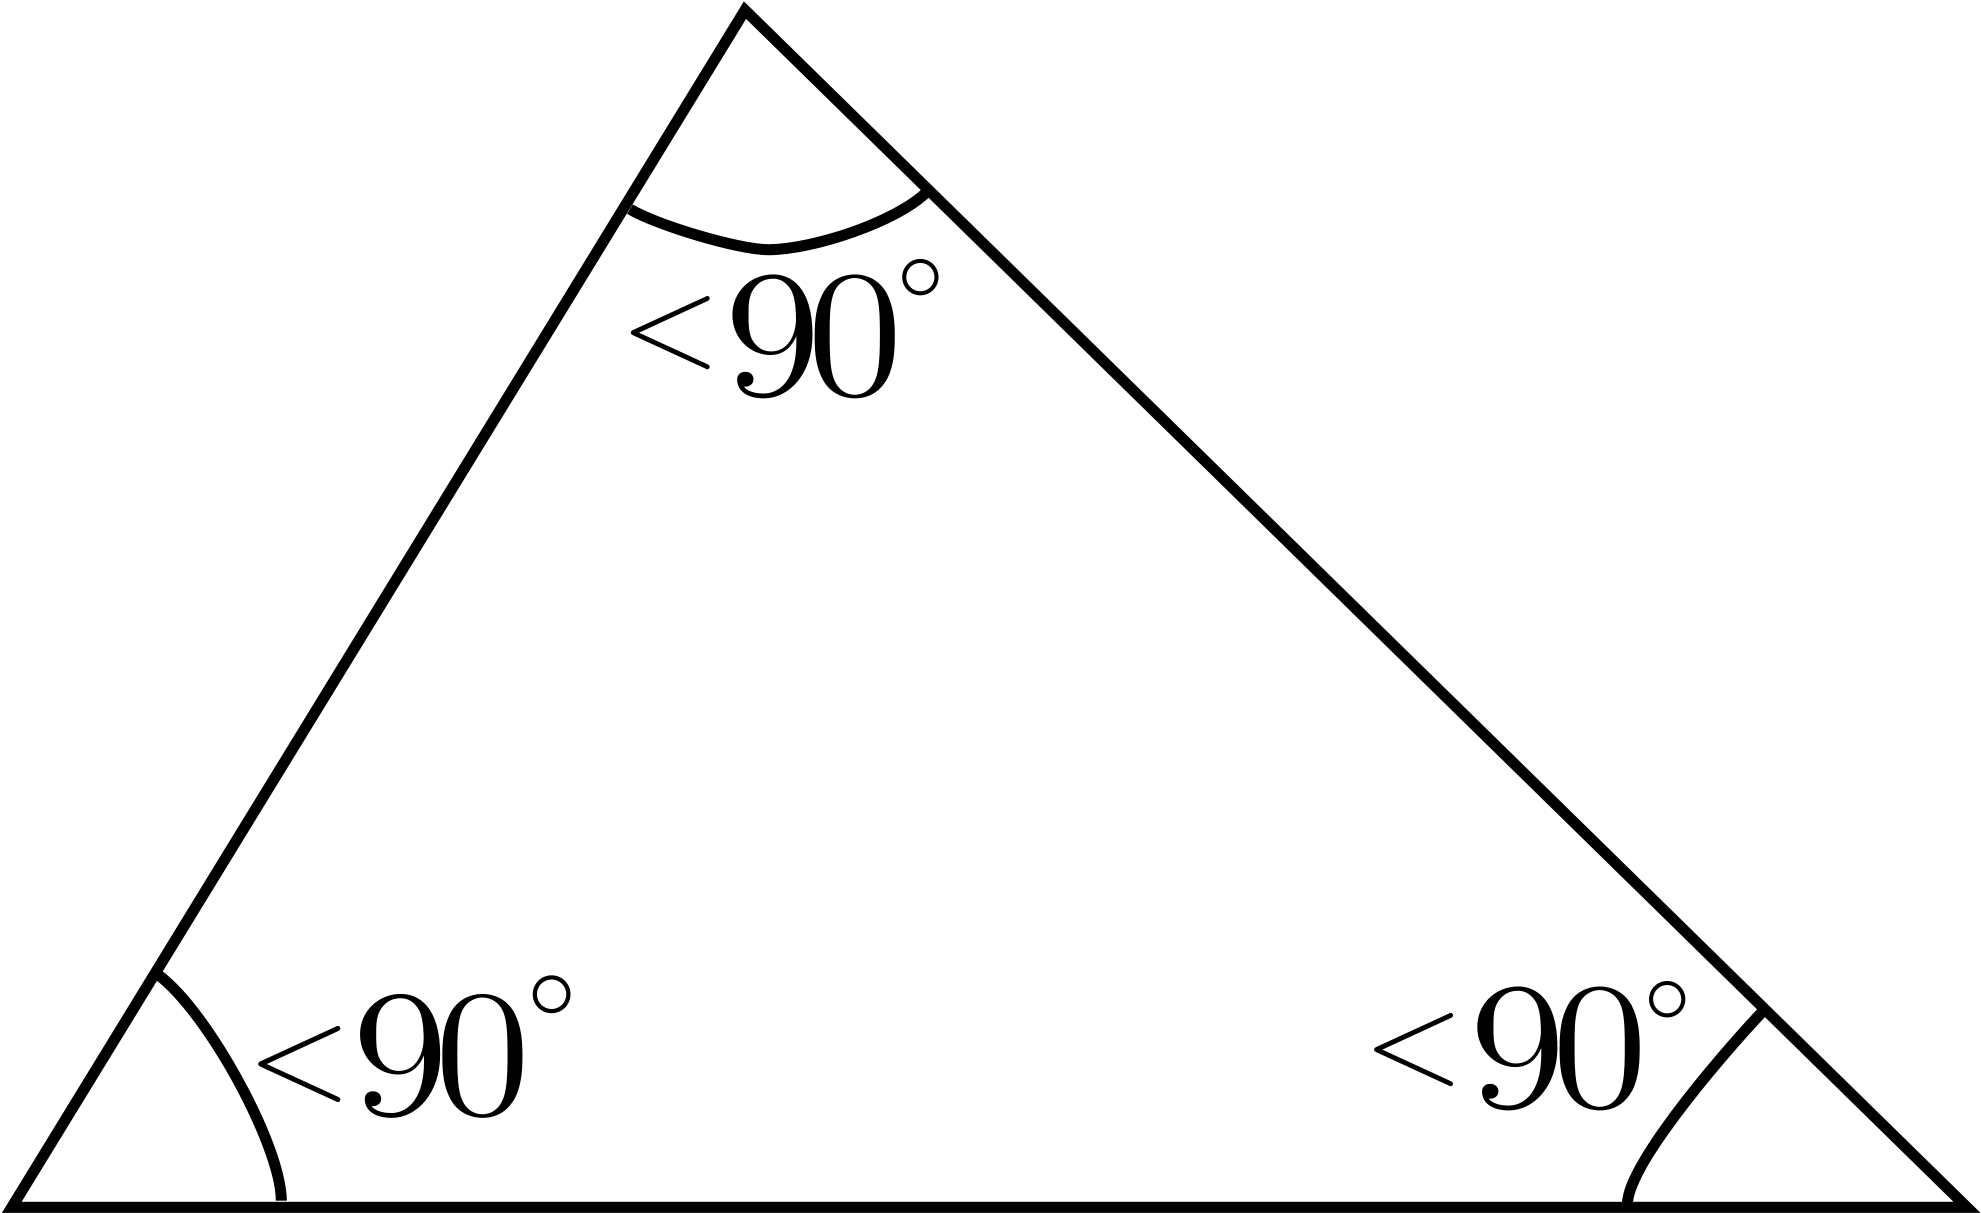 Open - Acute Triangle (2000x1249)